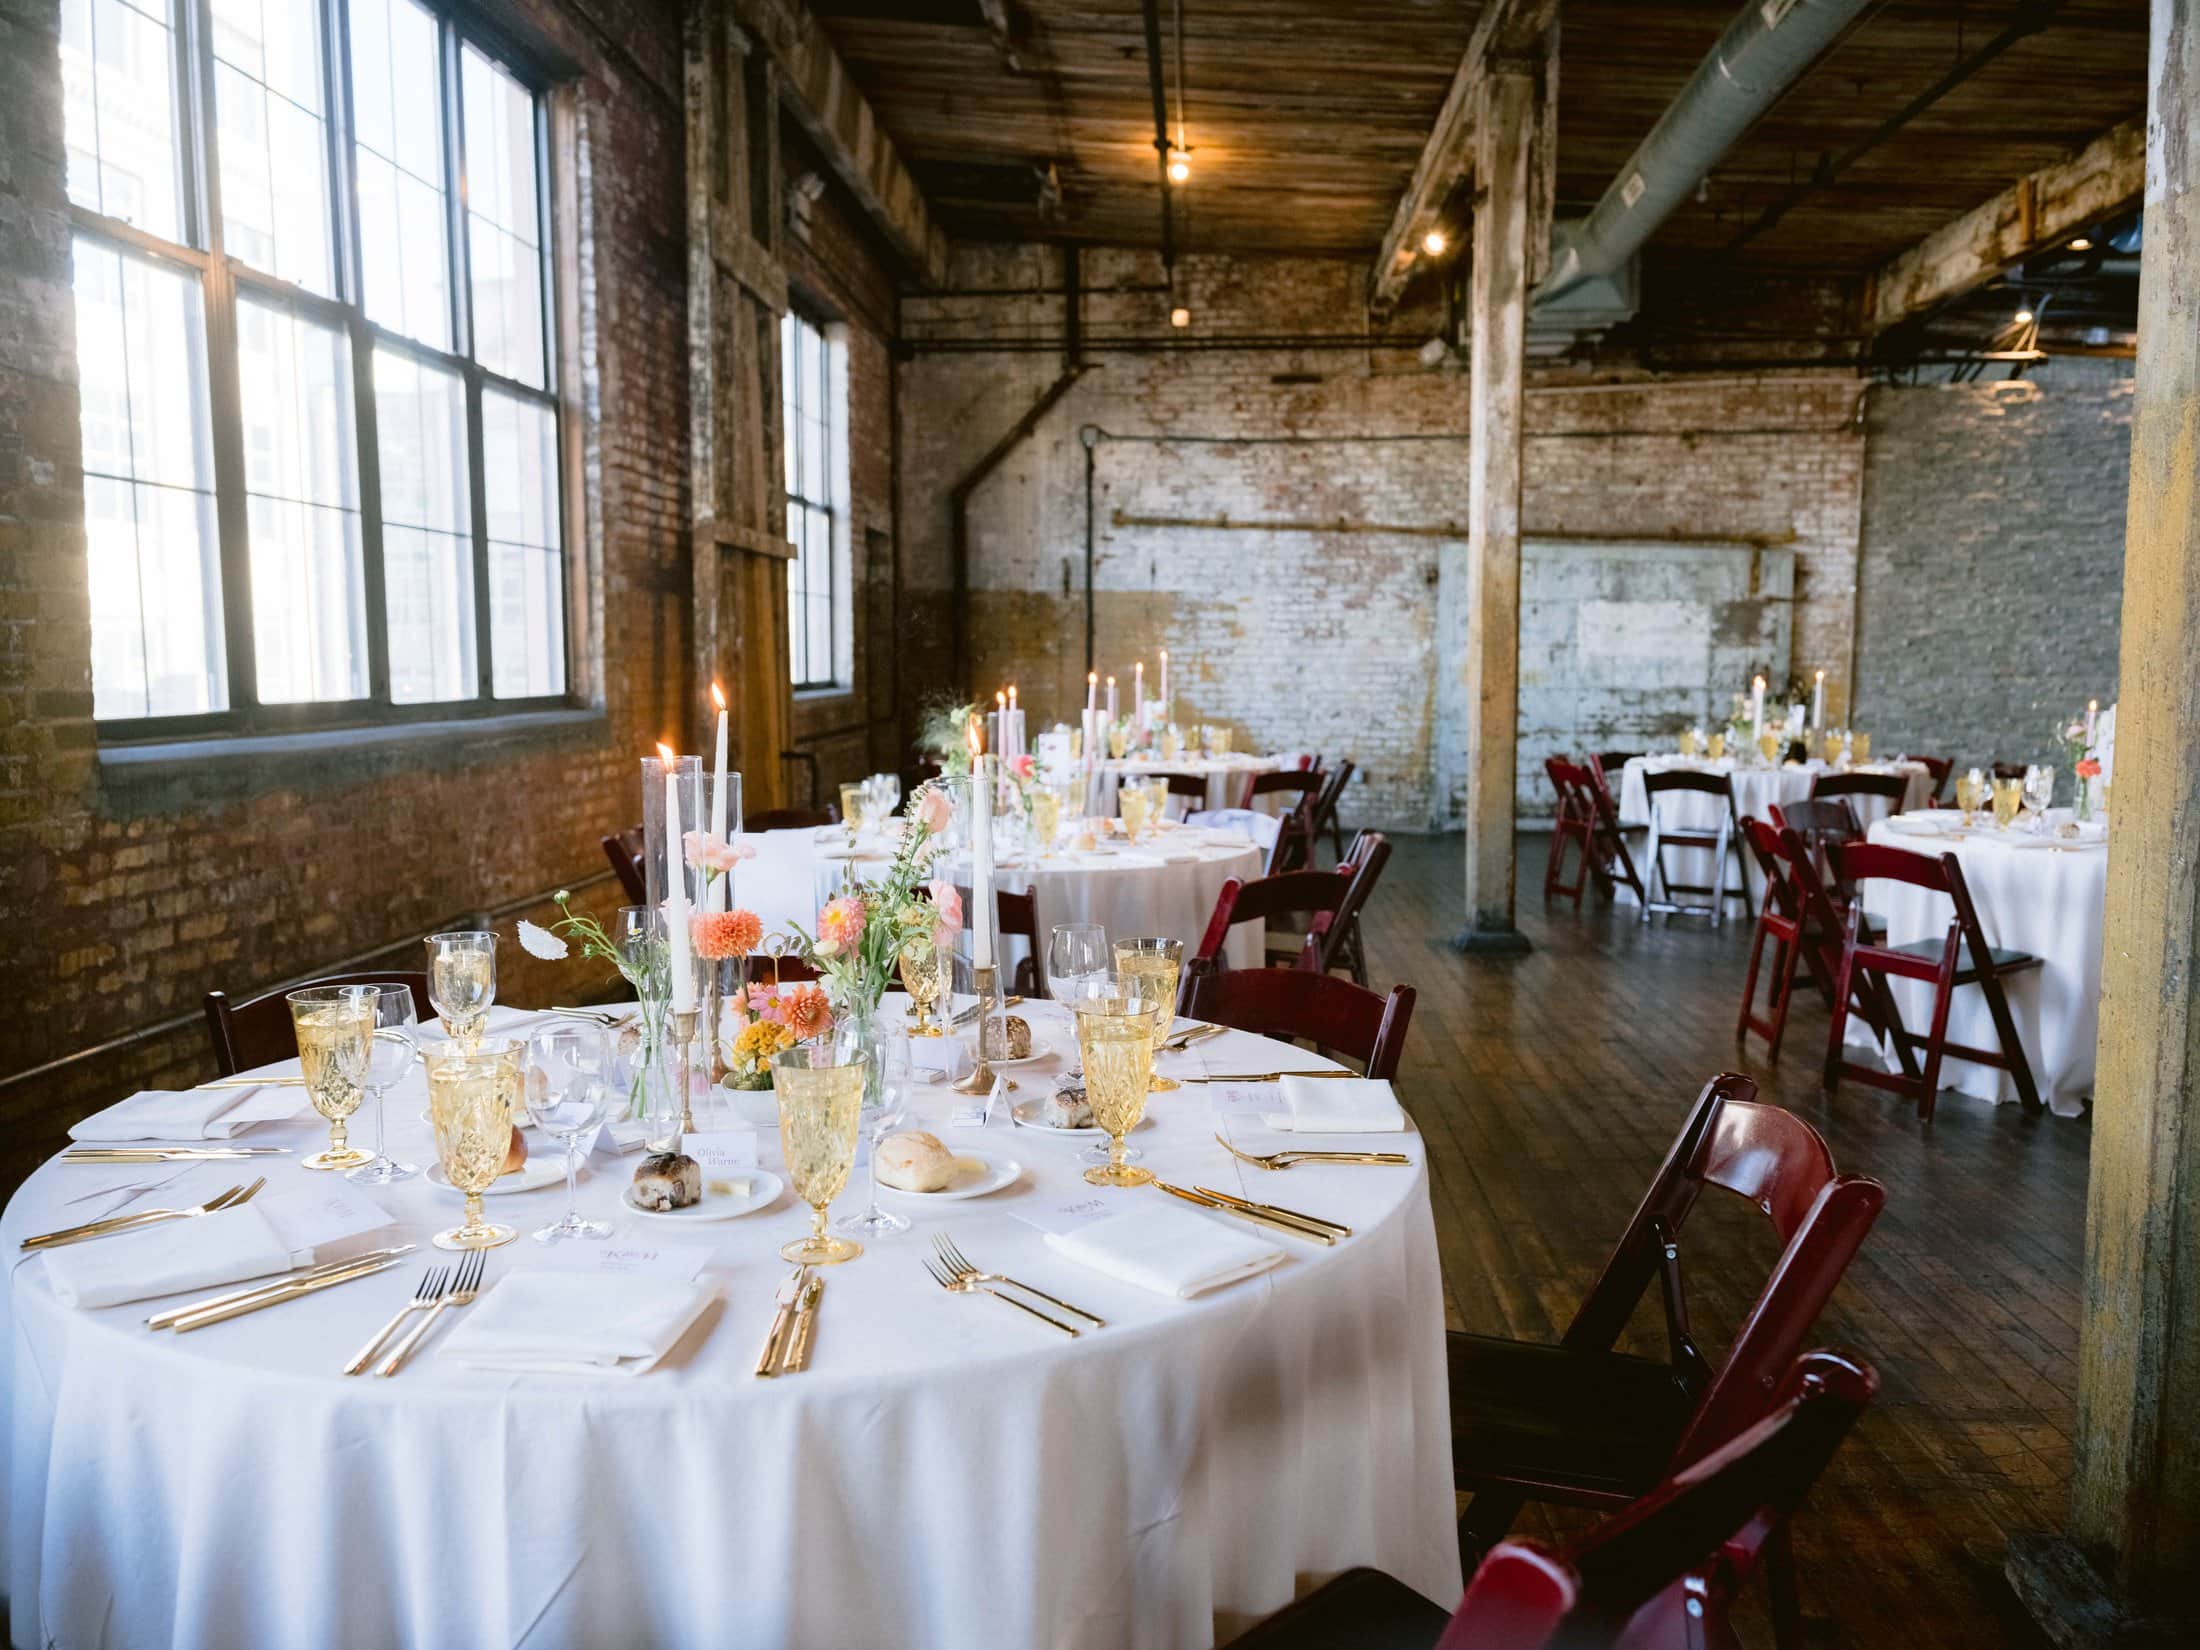 Greenpoint Loft Industrial NYC Wedding Venue